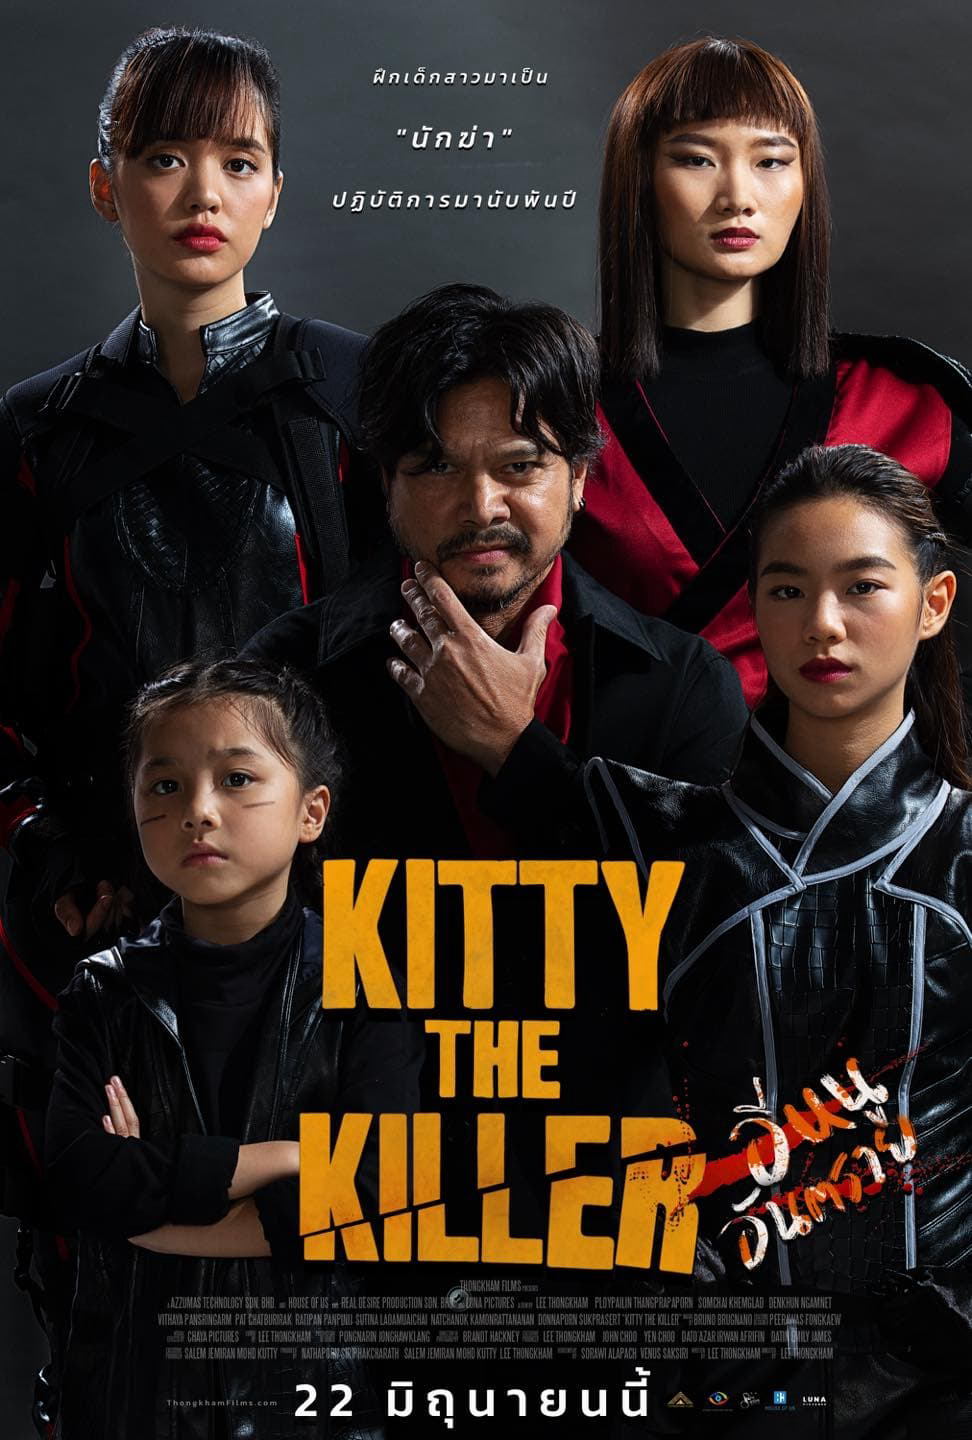 Kitty The Killer - Kitty The Killer